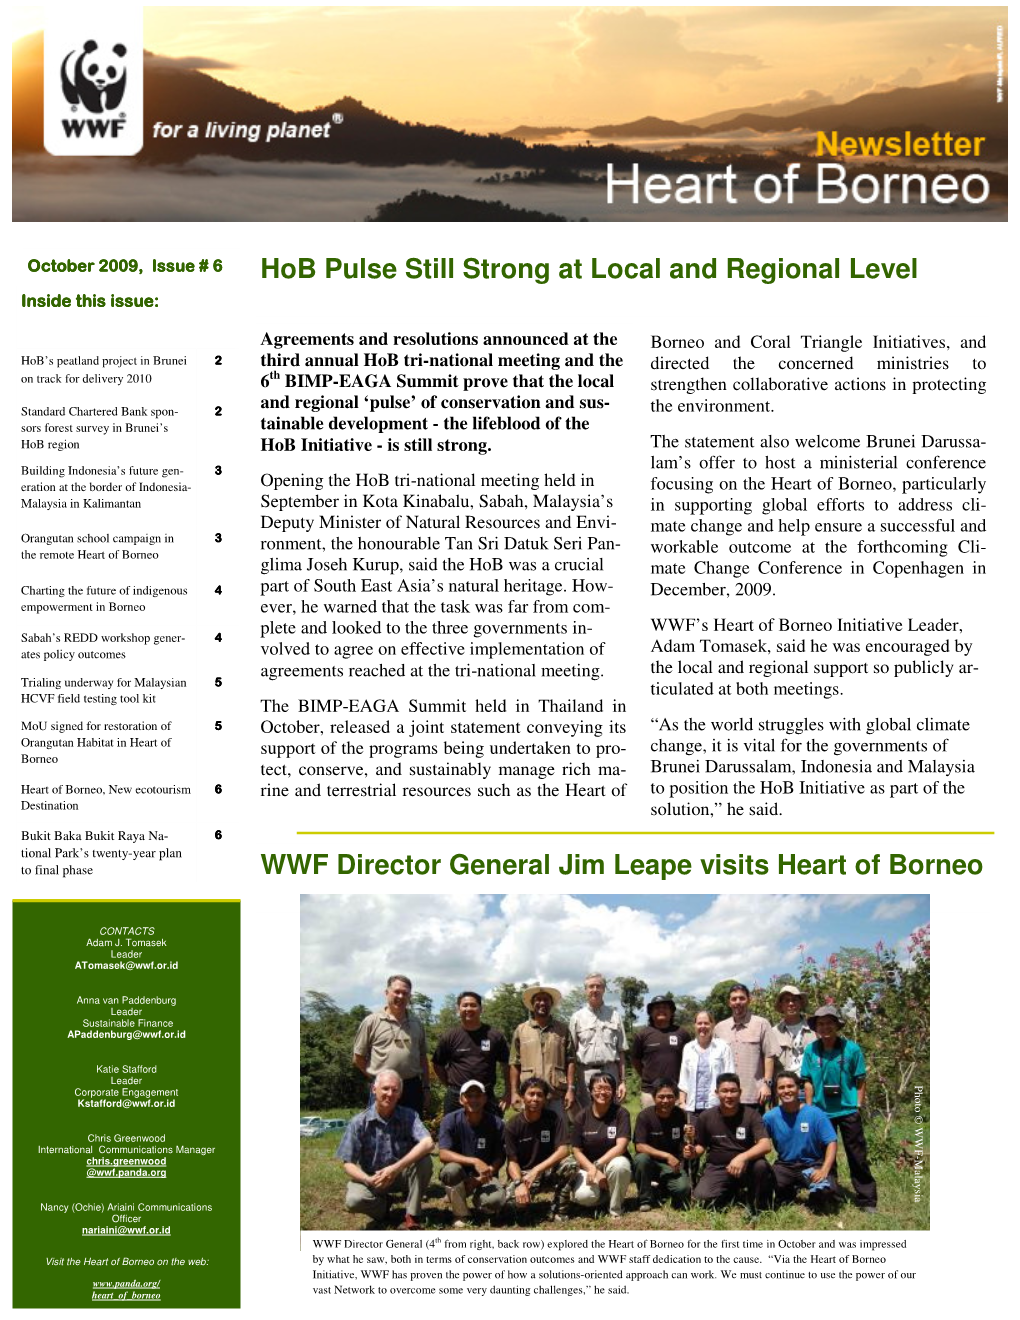 Heart of Borneo NI Newsletter October-Resized